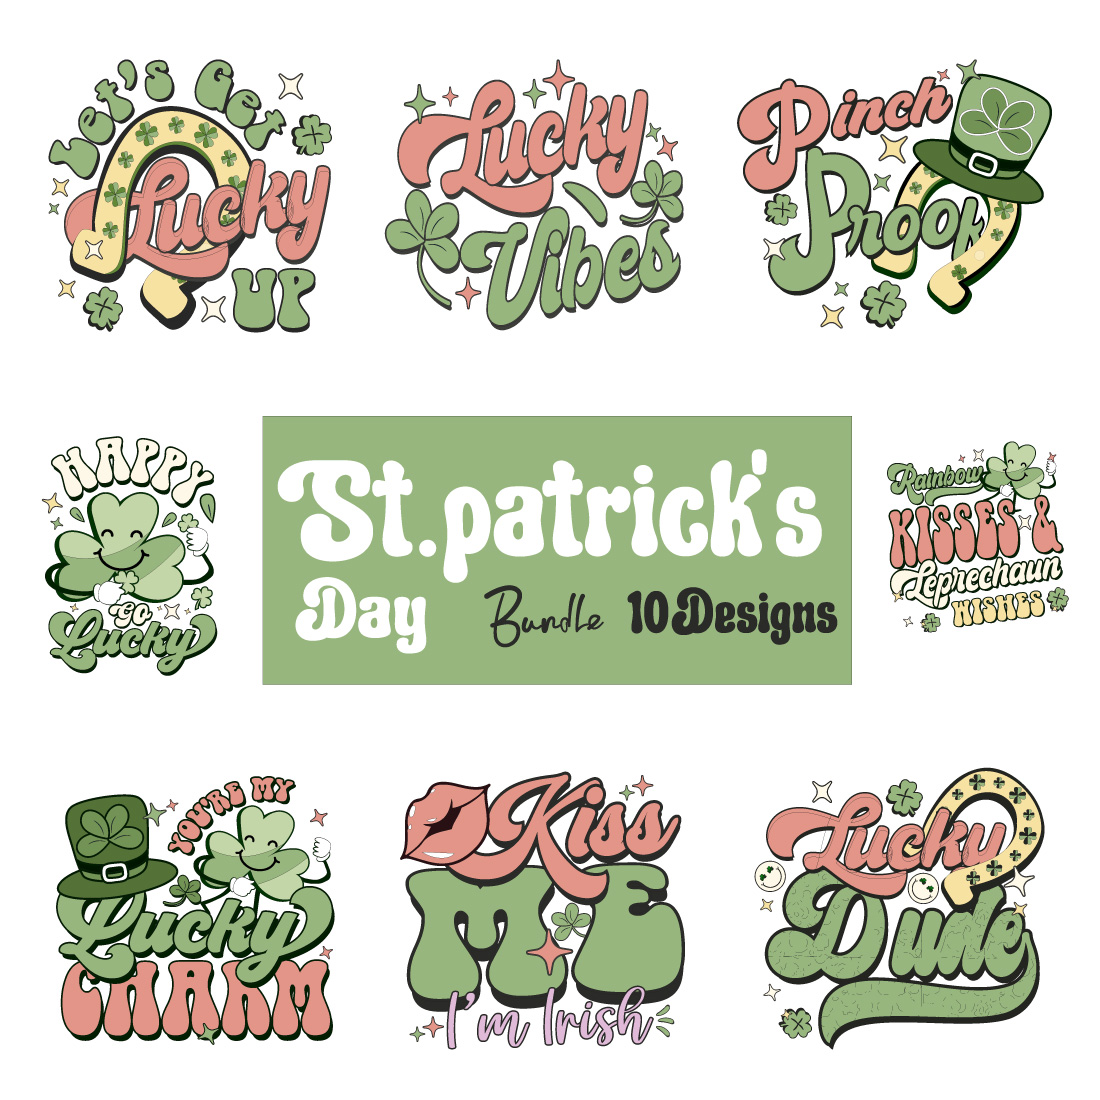 St Patrick’s Day SVG Bundle cover image.